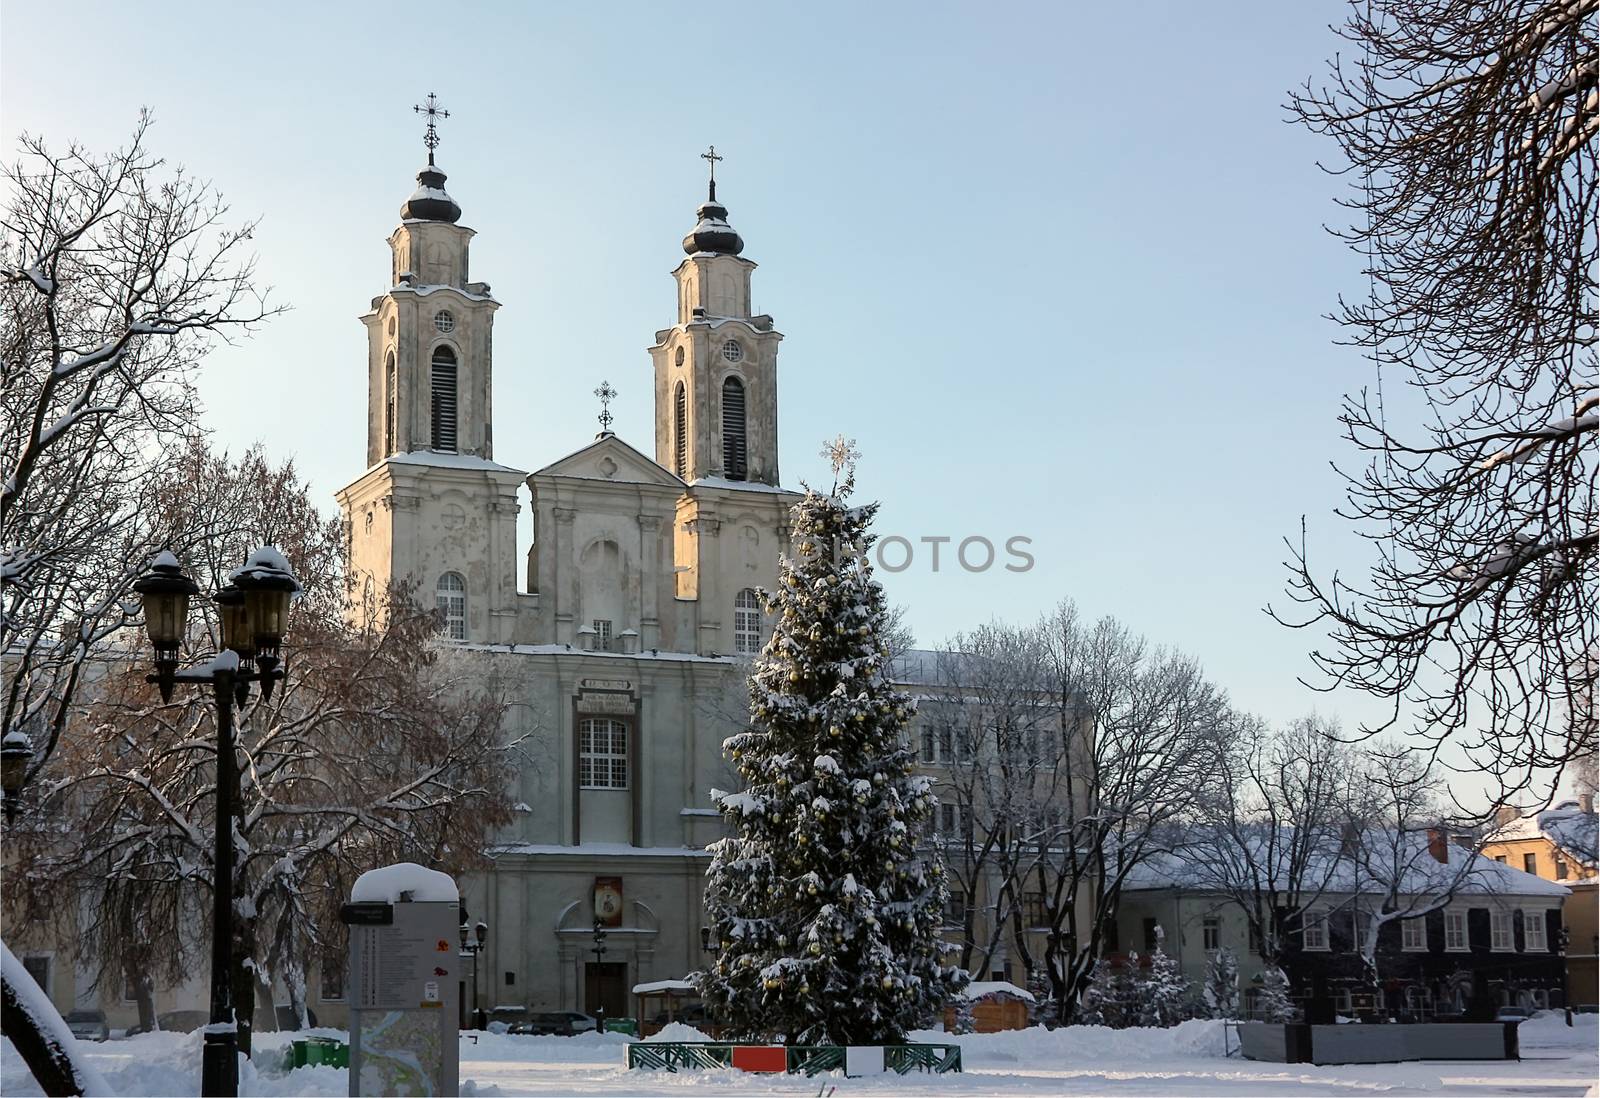 Church of St. Francis Xavier, Kaunas by borisb17